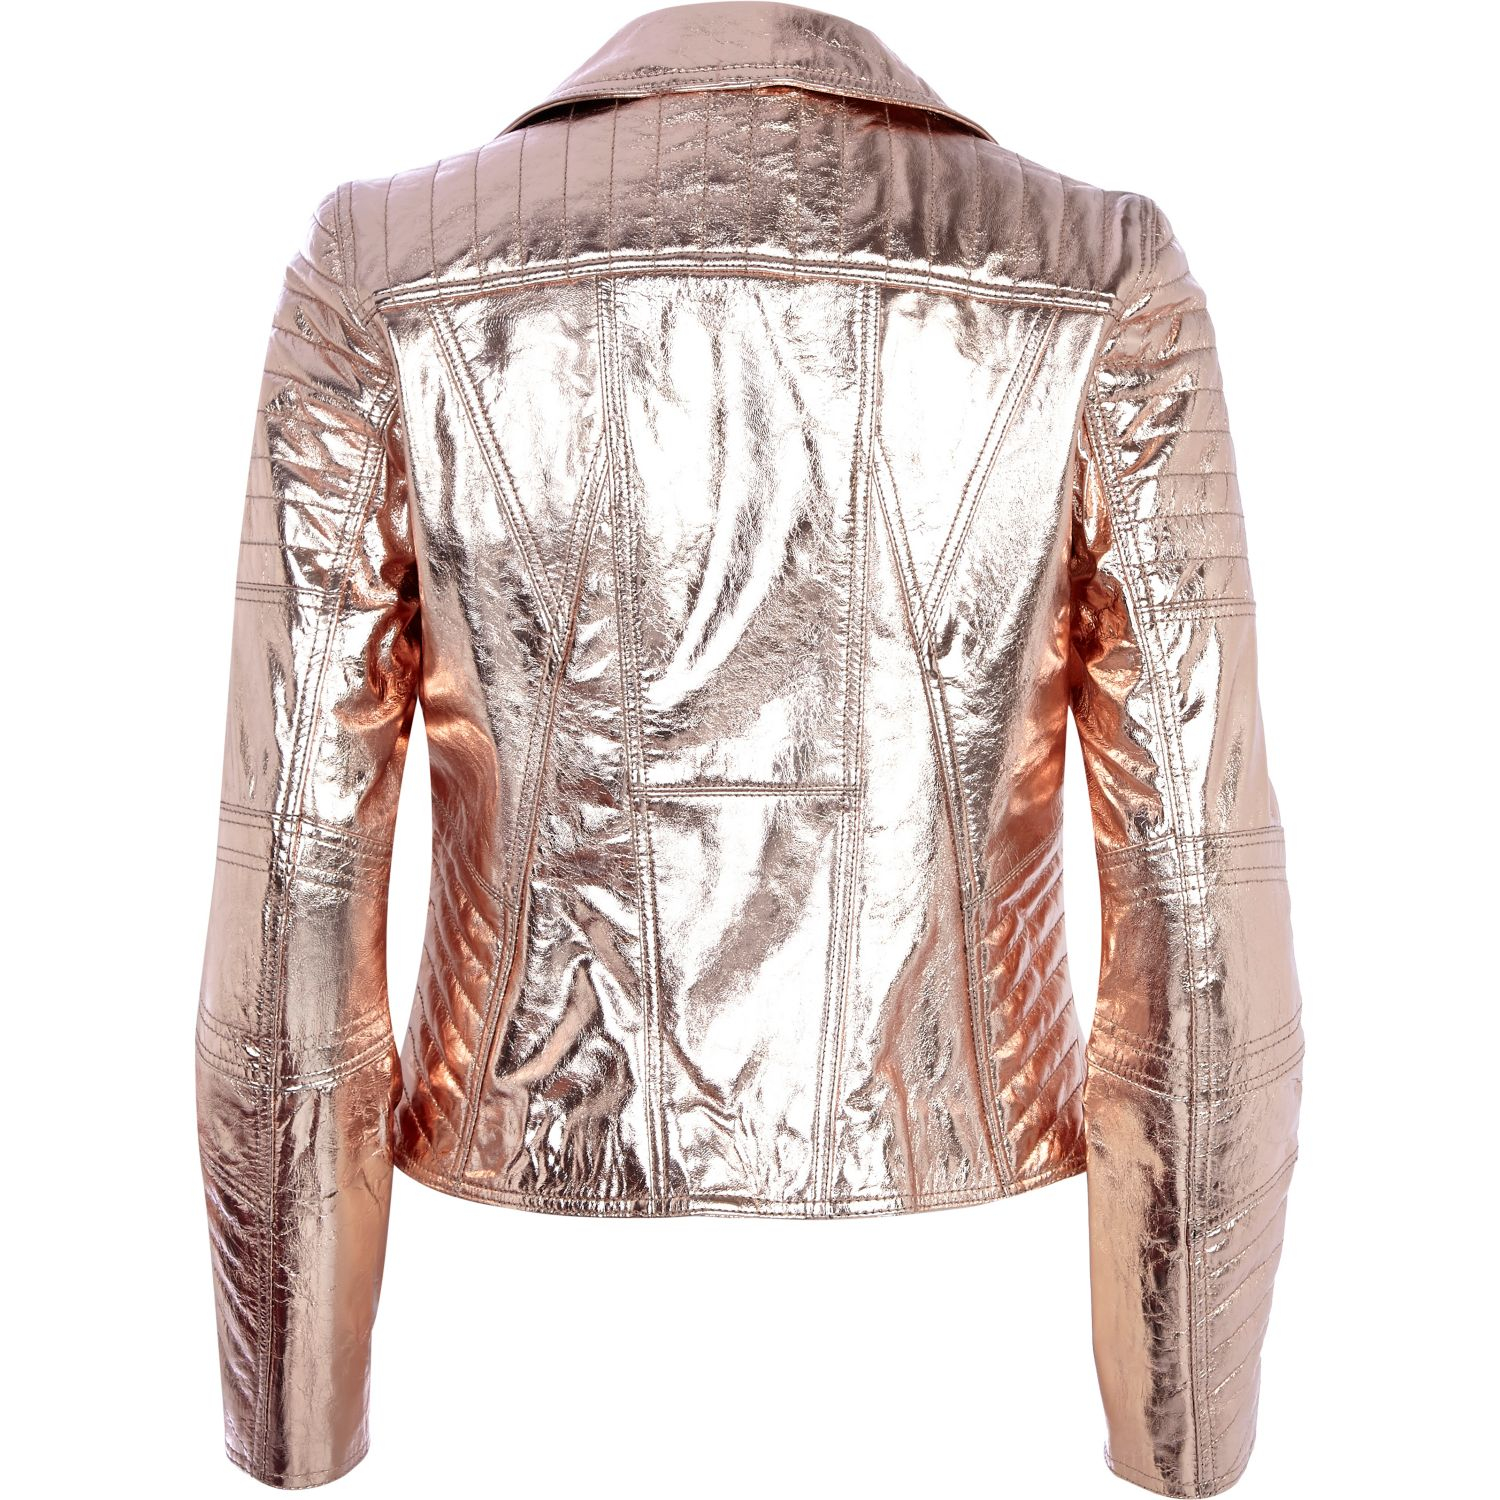 River Island Rose Gold Metallic Leather Biker Jacket in Pink - Lyst